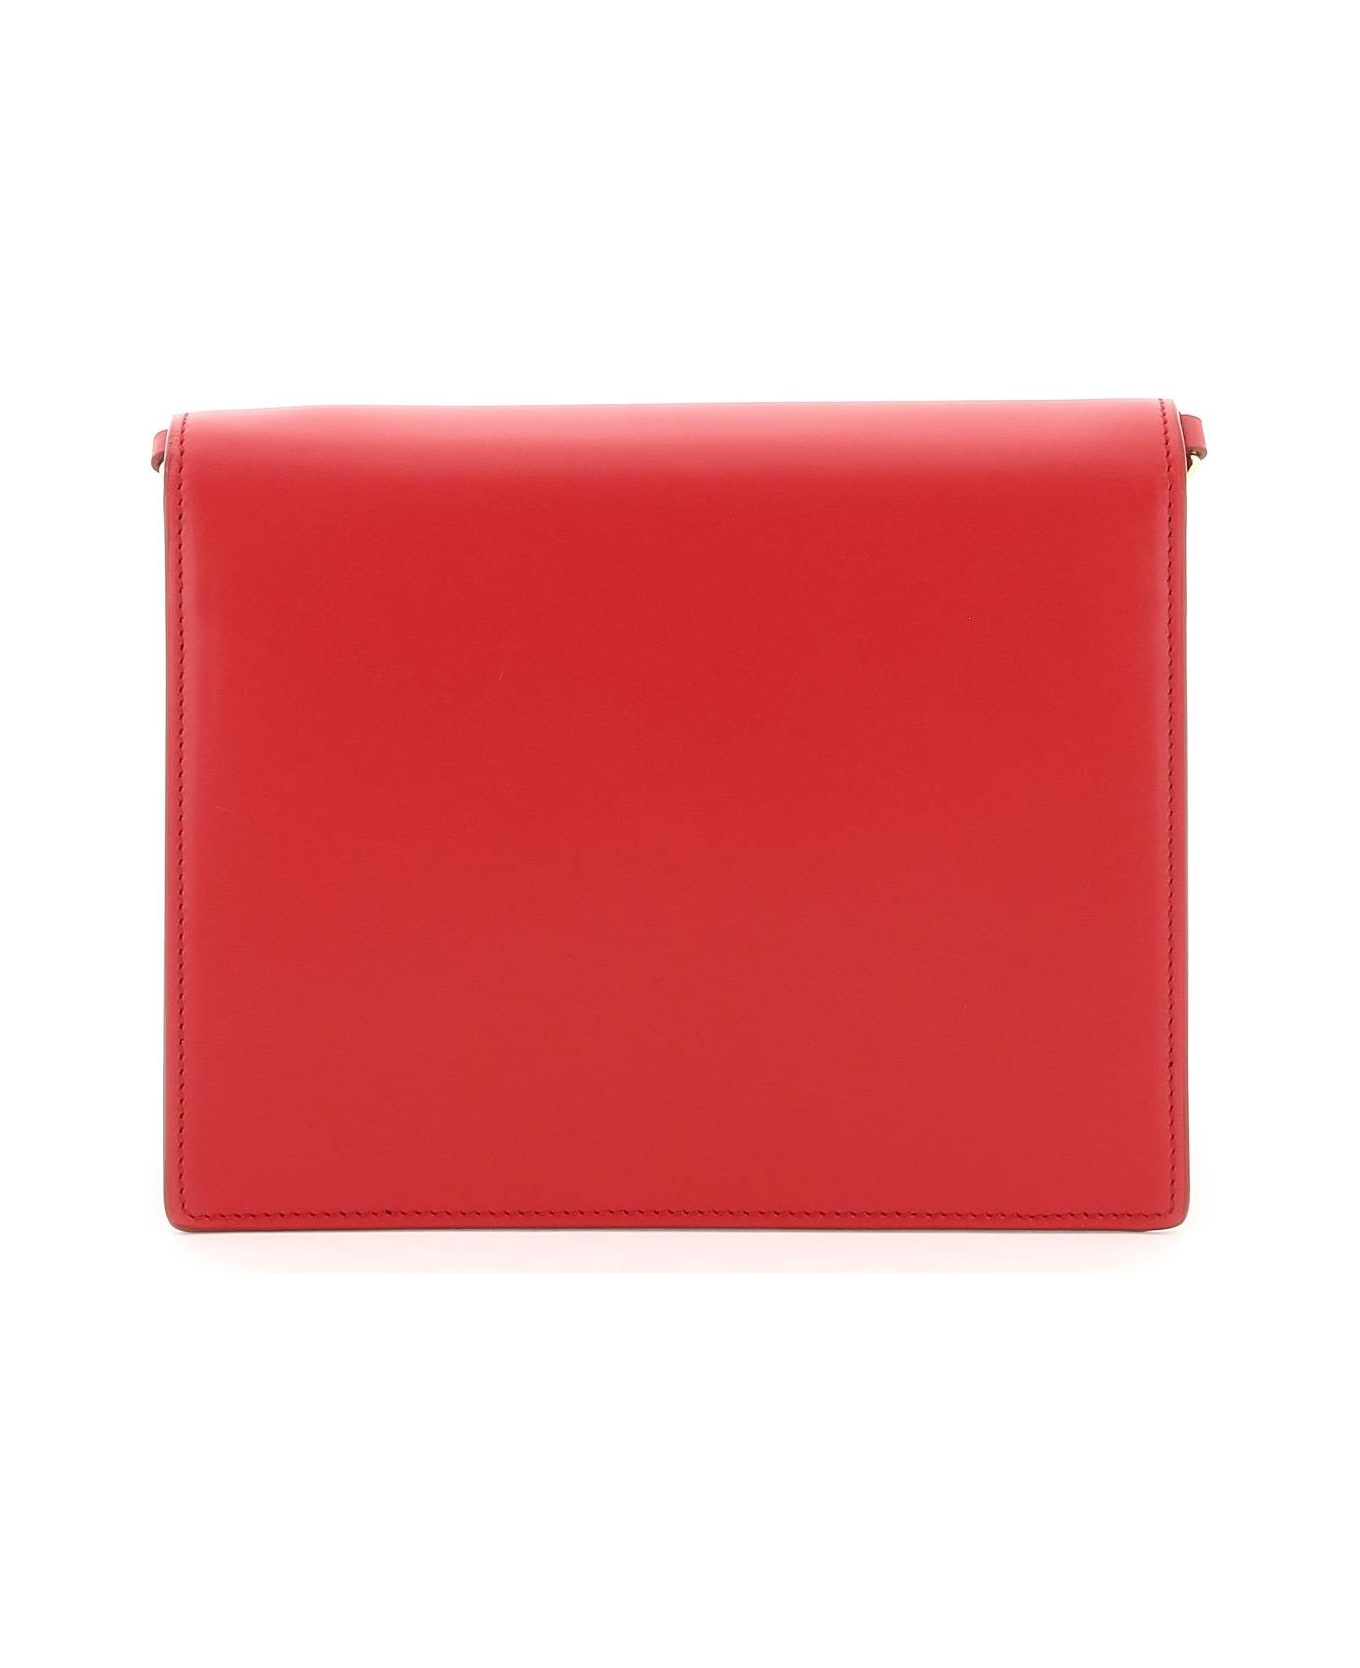 Dolce & Gabbana Leather Shoulder Bag - Rosso ショルダーバッグ